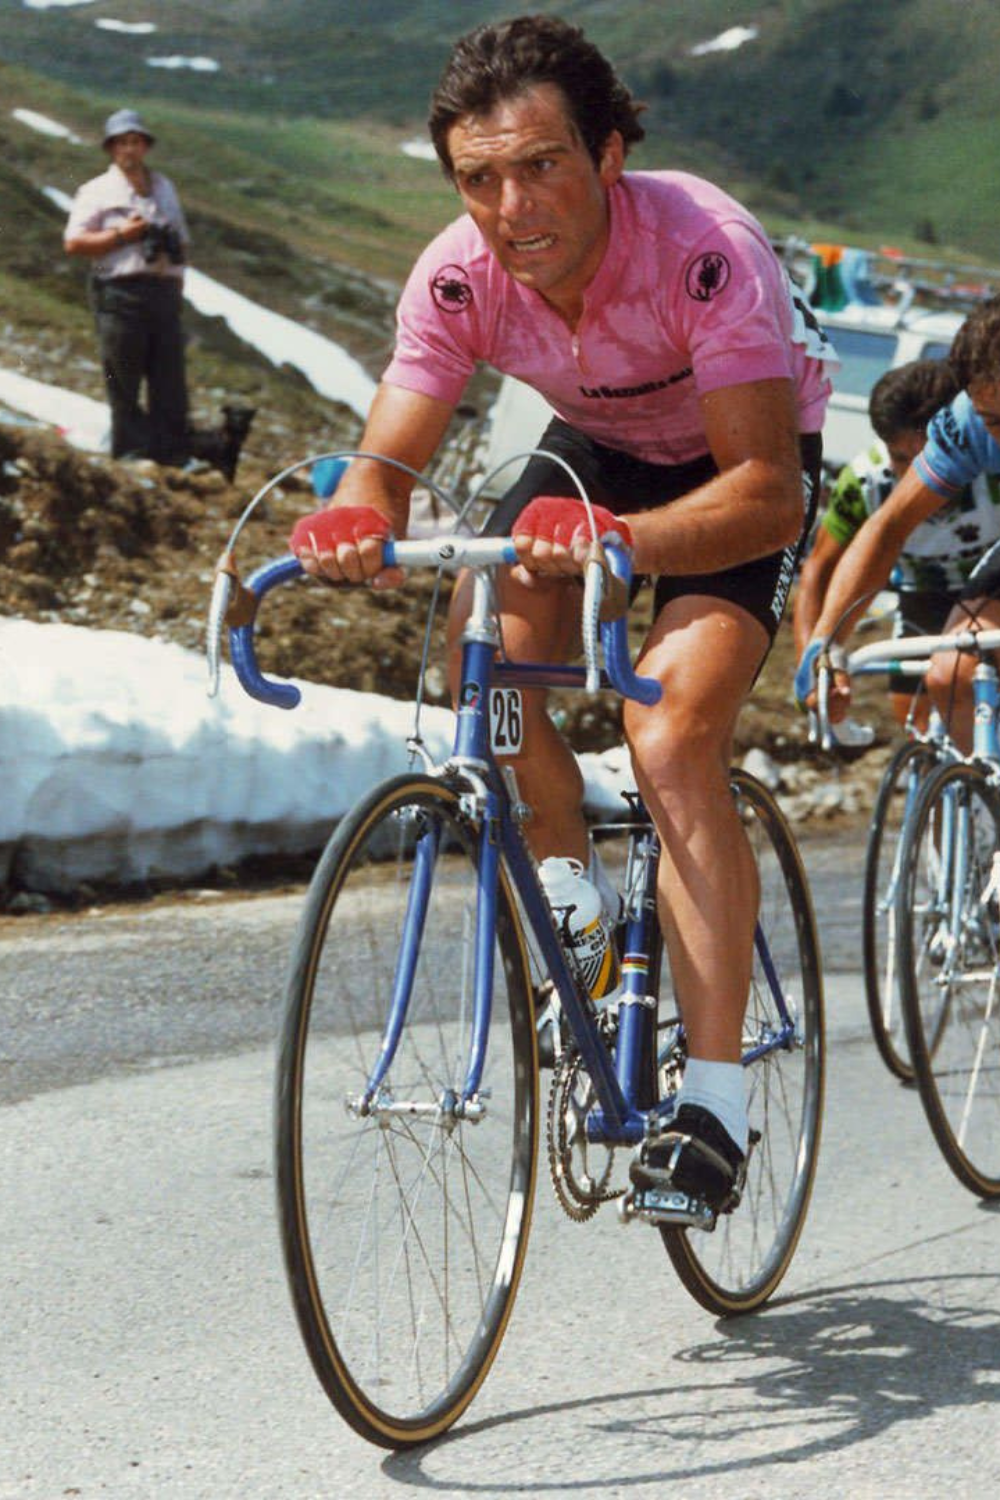 Bernard Hinaut, A Former Professional Road Cyclist